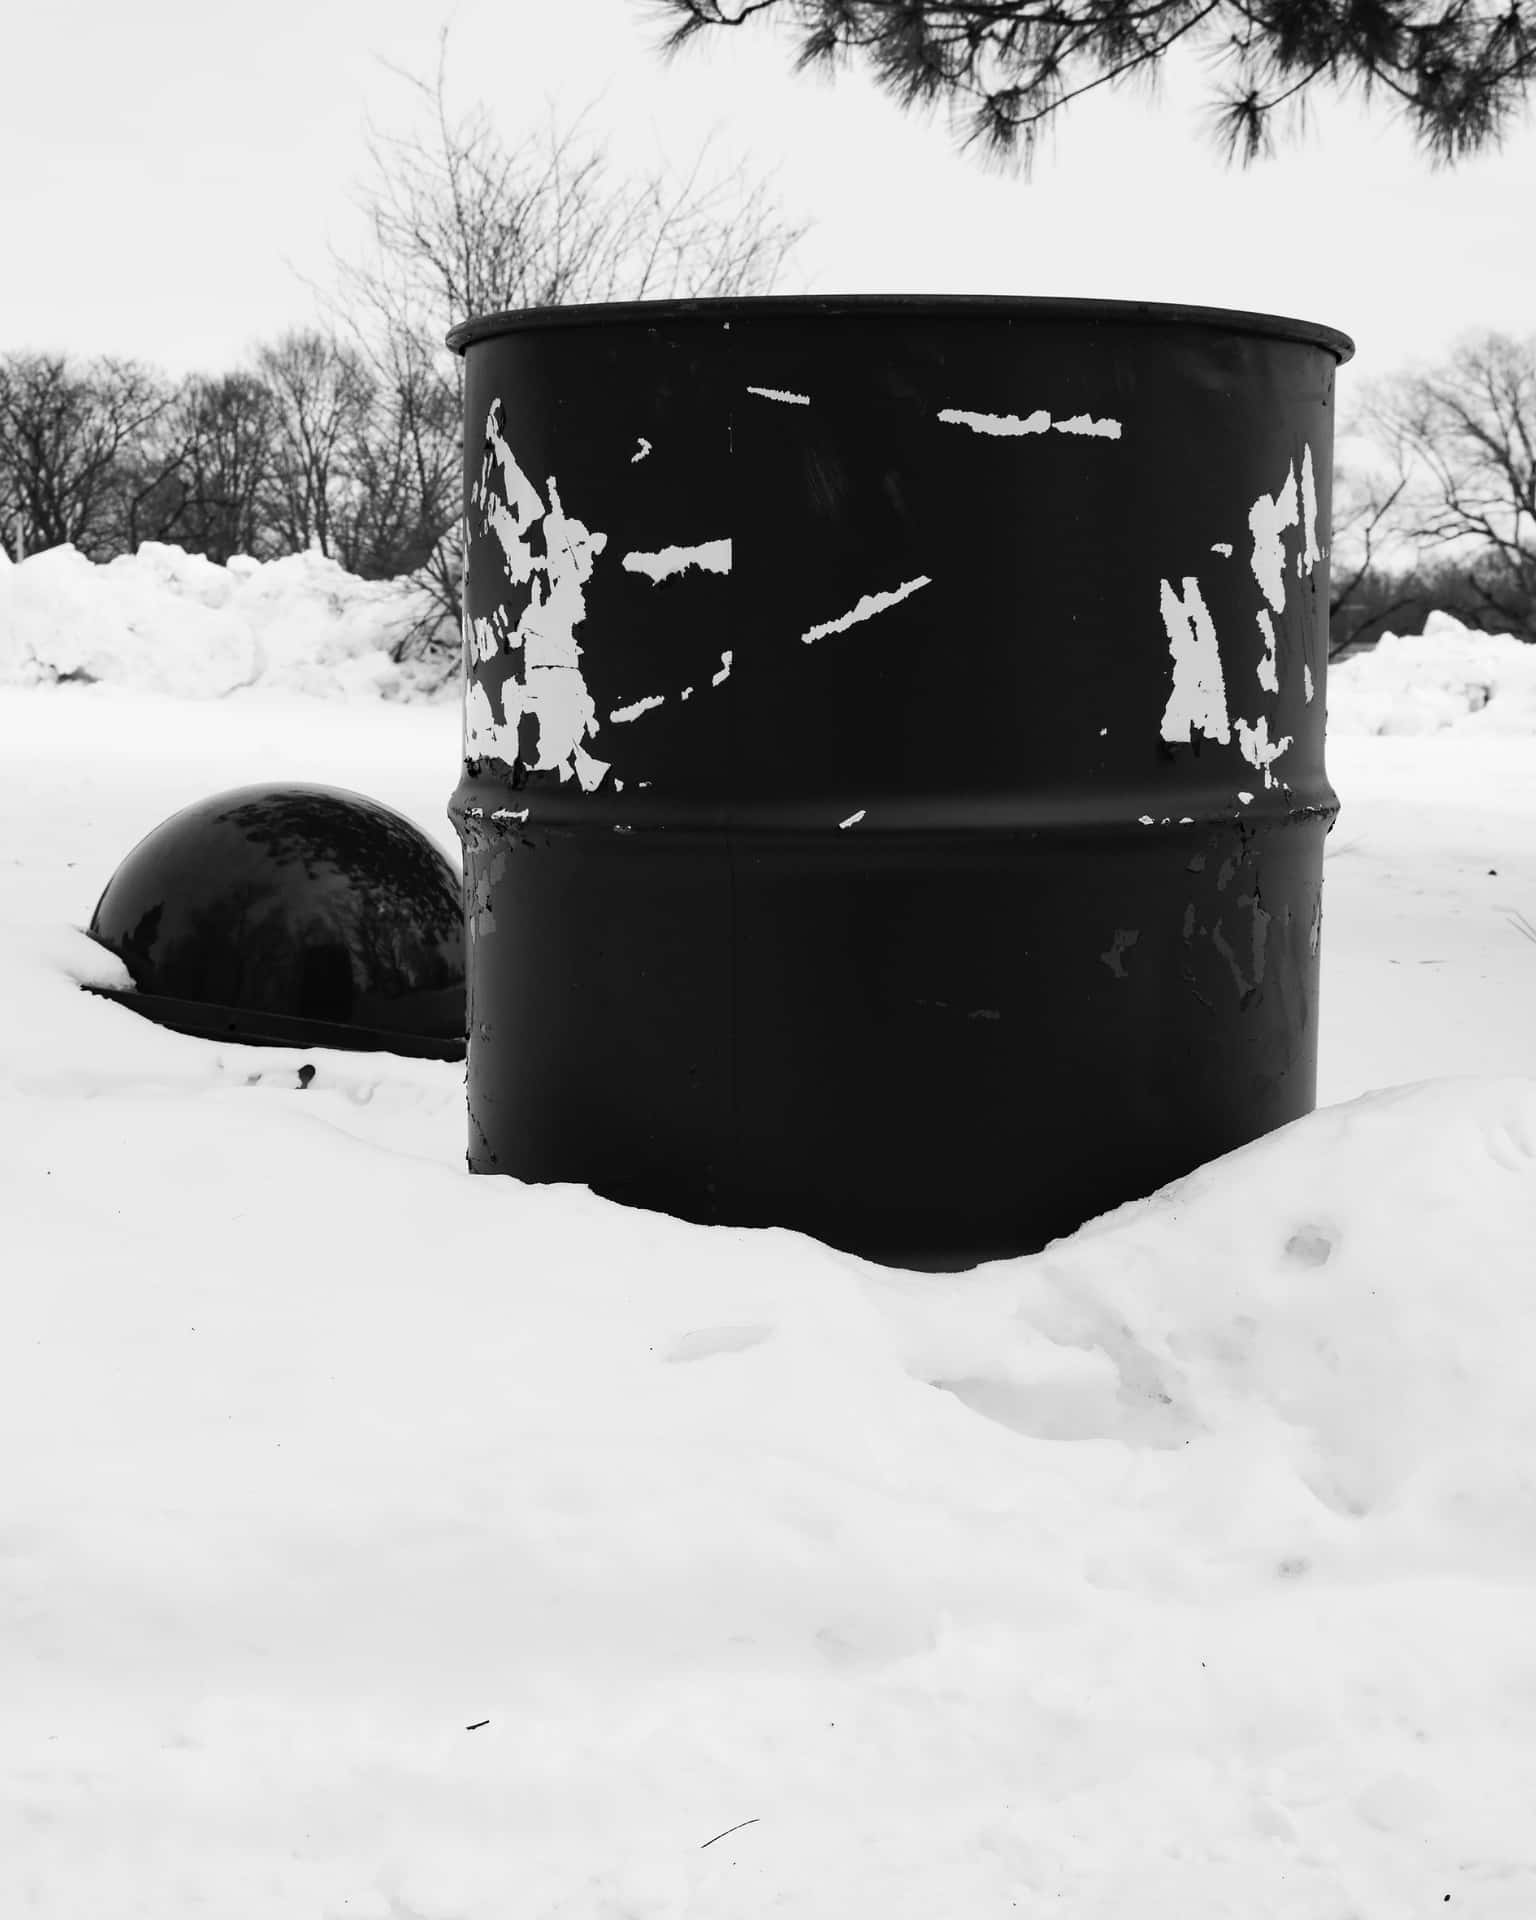 Black Metal Trash Can In Snow Wallpaper